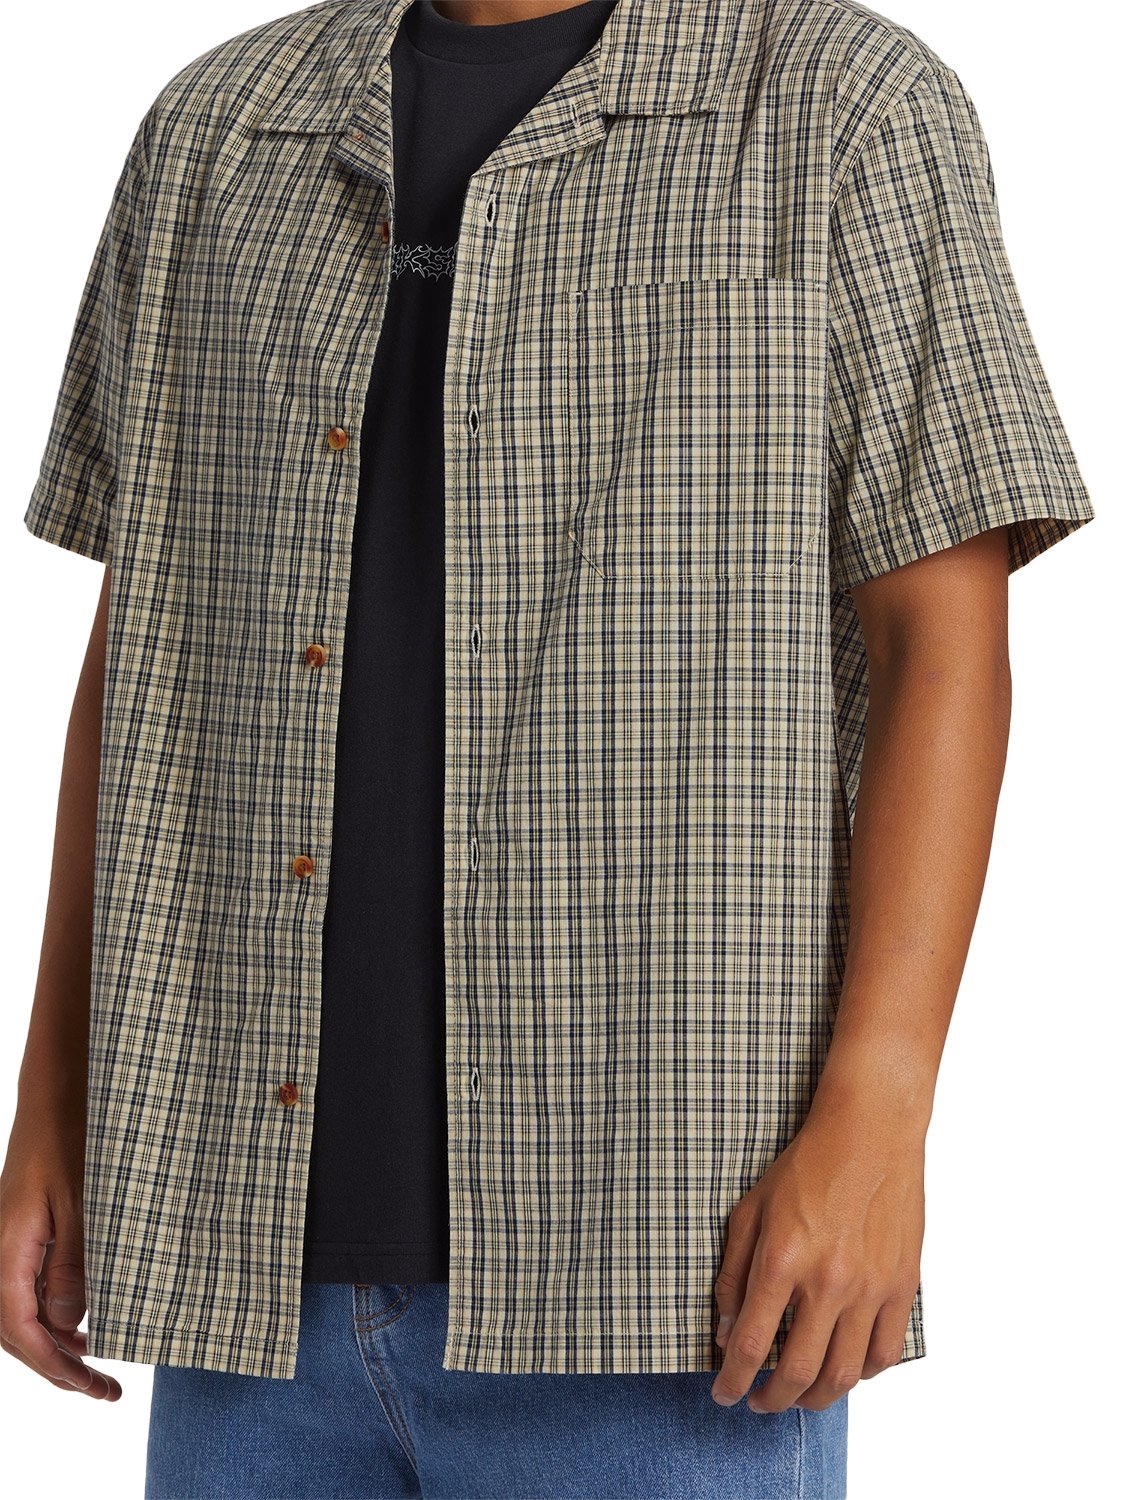 Quiksilver Men's Saturn Casual Shirt